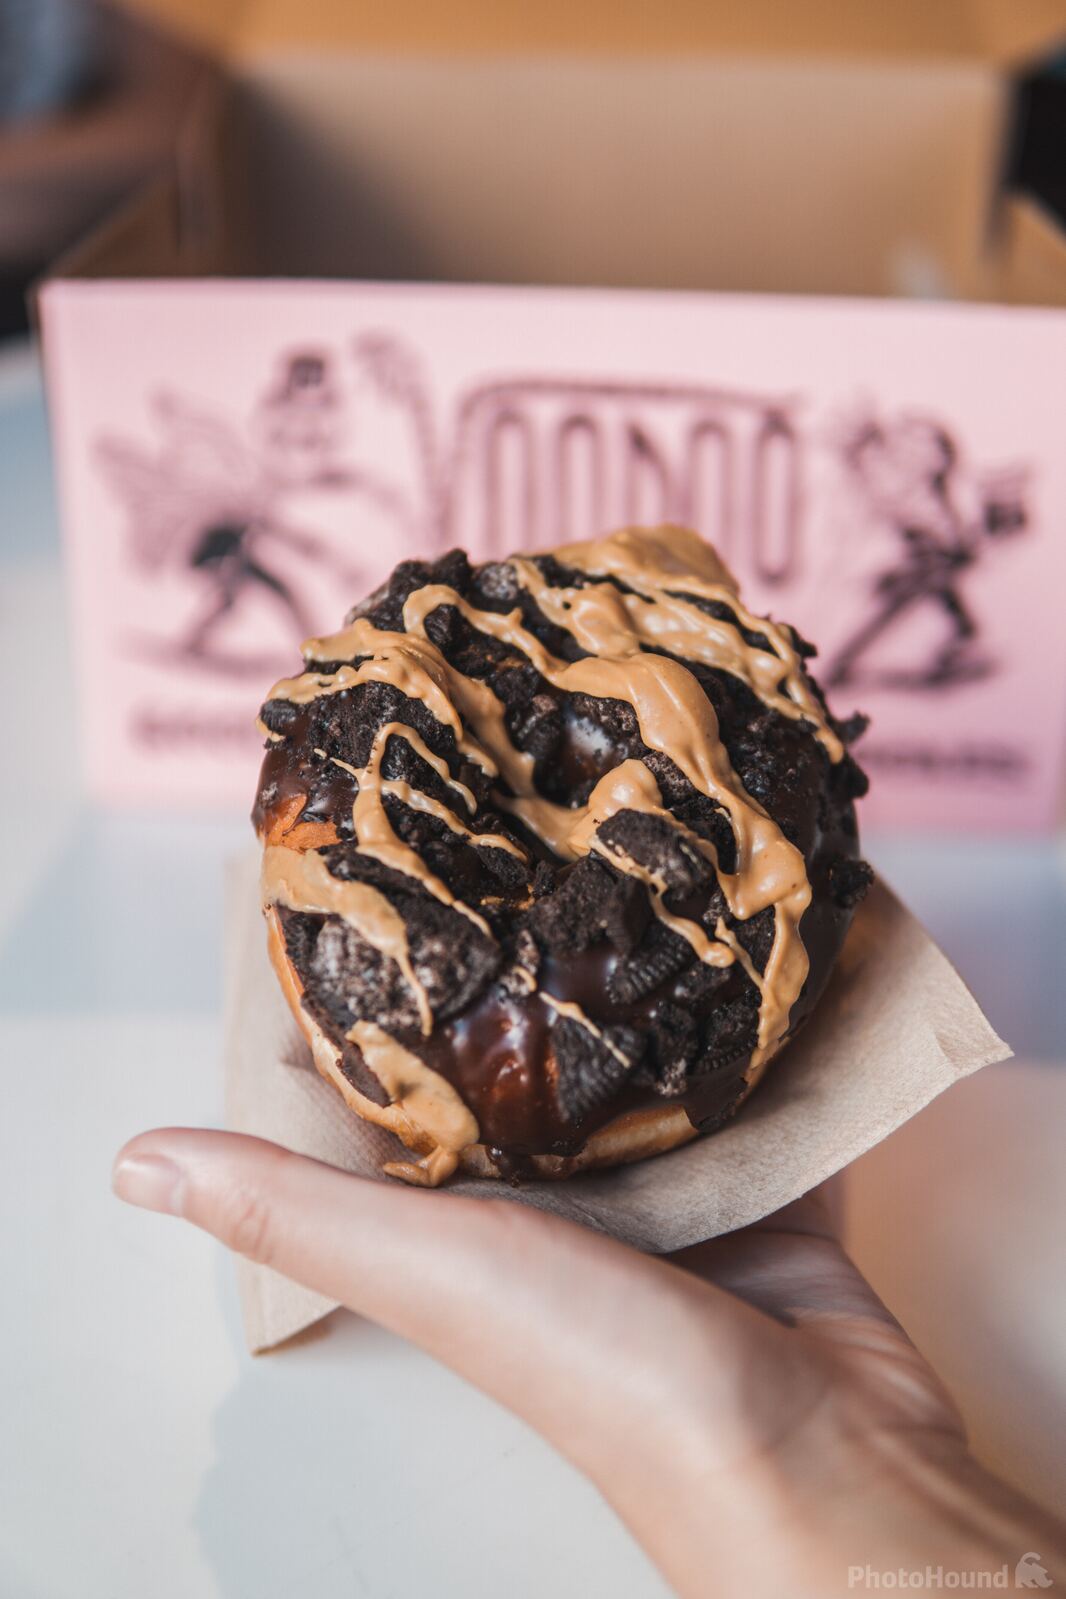 Image of Voodoo Doughnut by Team PhotoHound